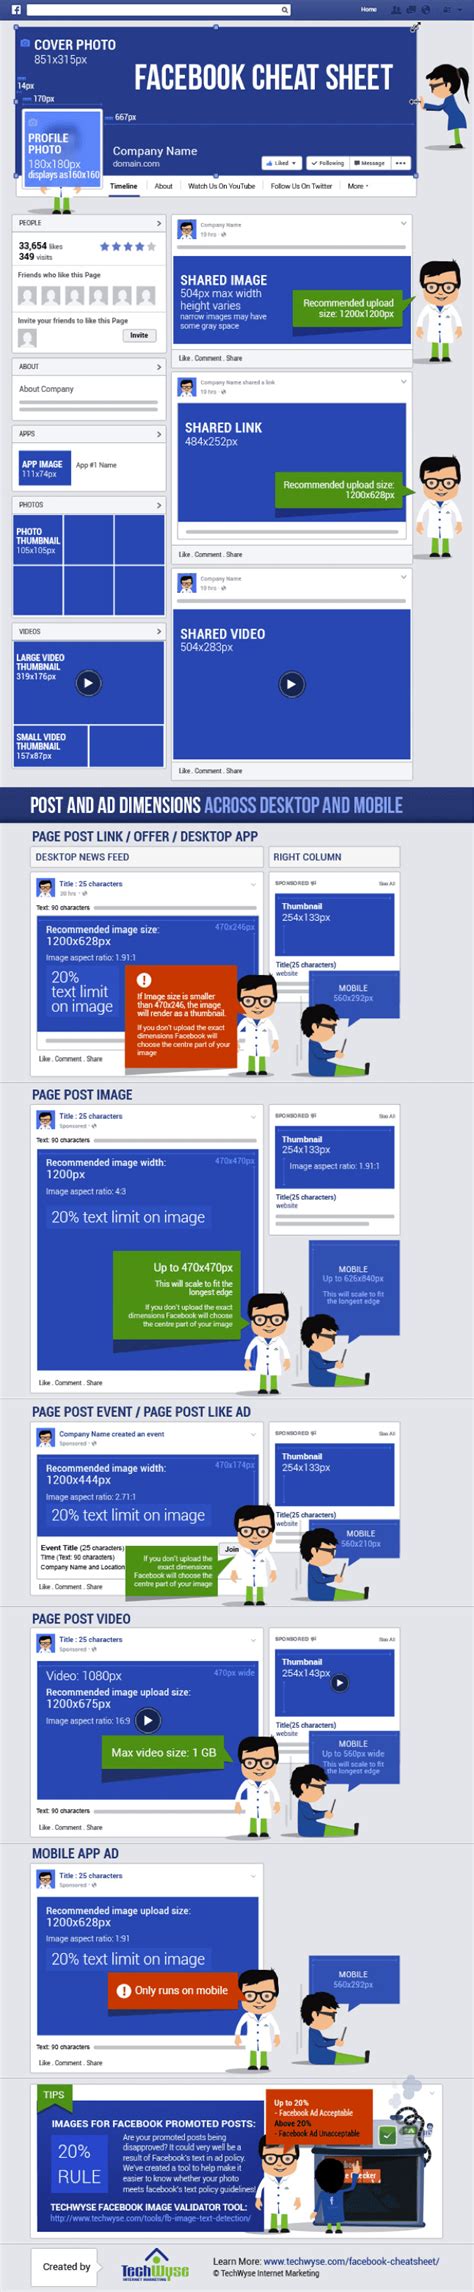 Facebook Images Cheat Sheet Smart Insights